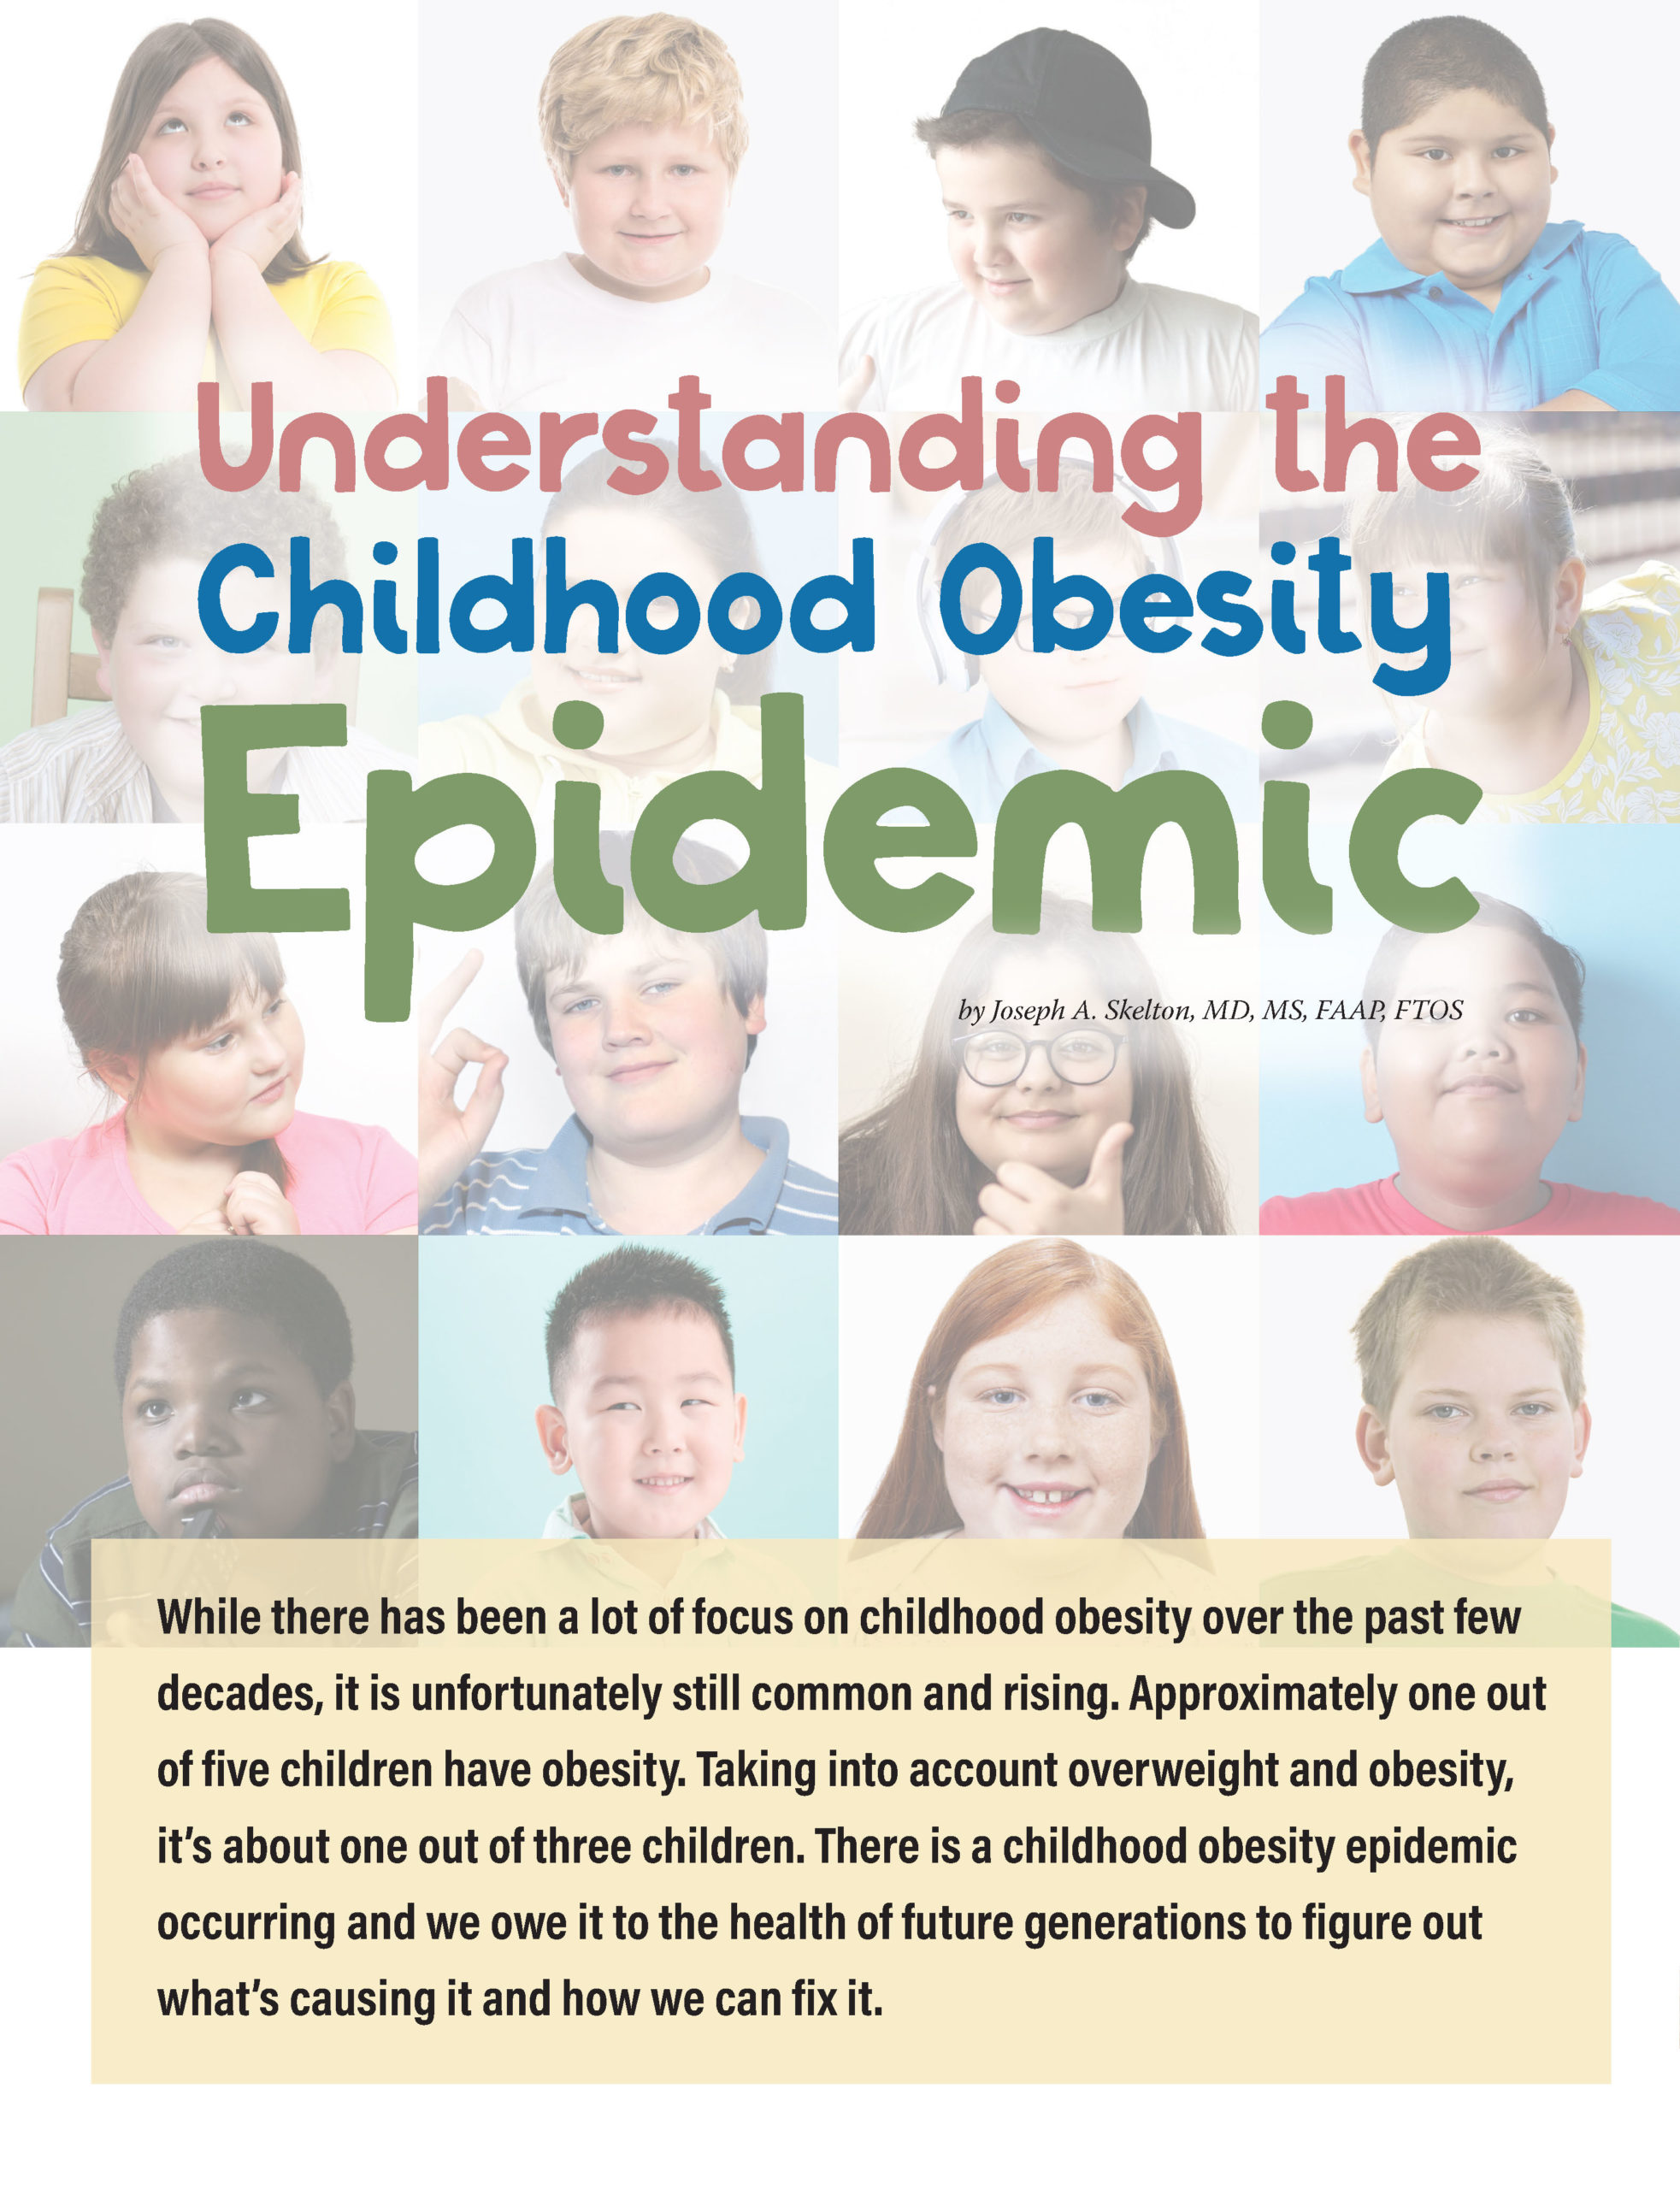 quantitative research study on childhood obesity